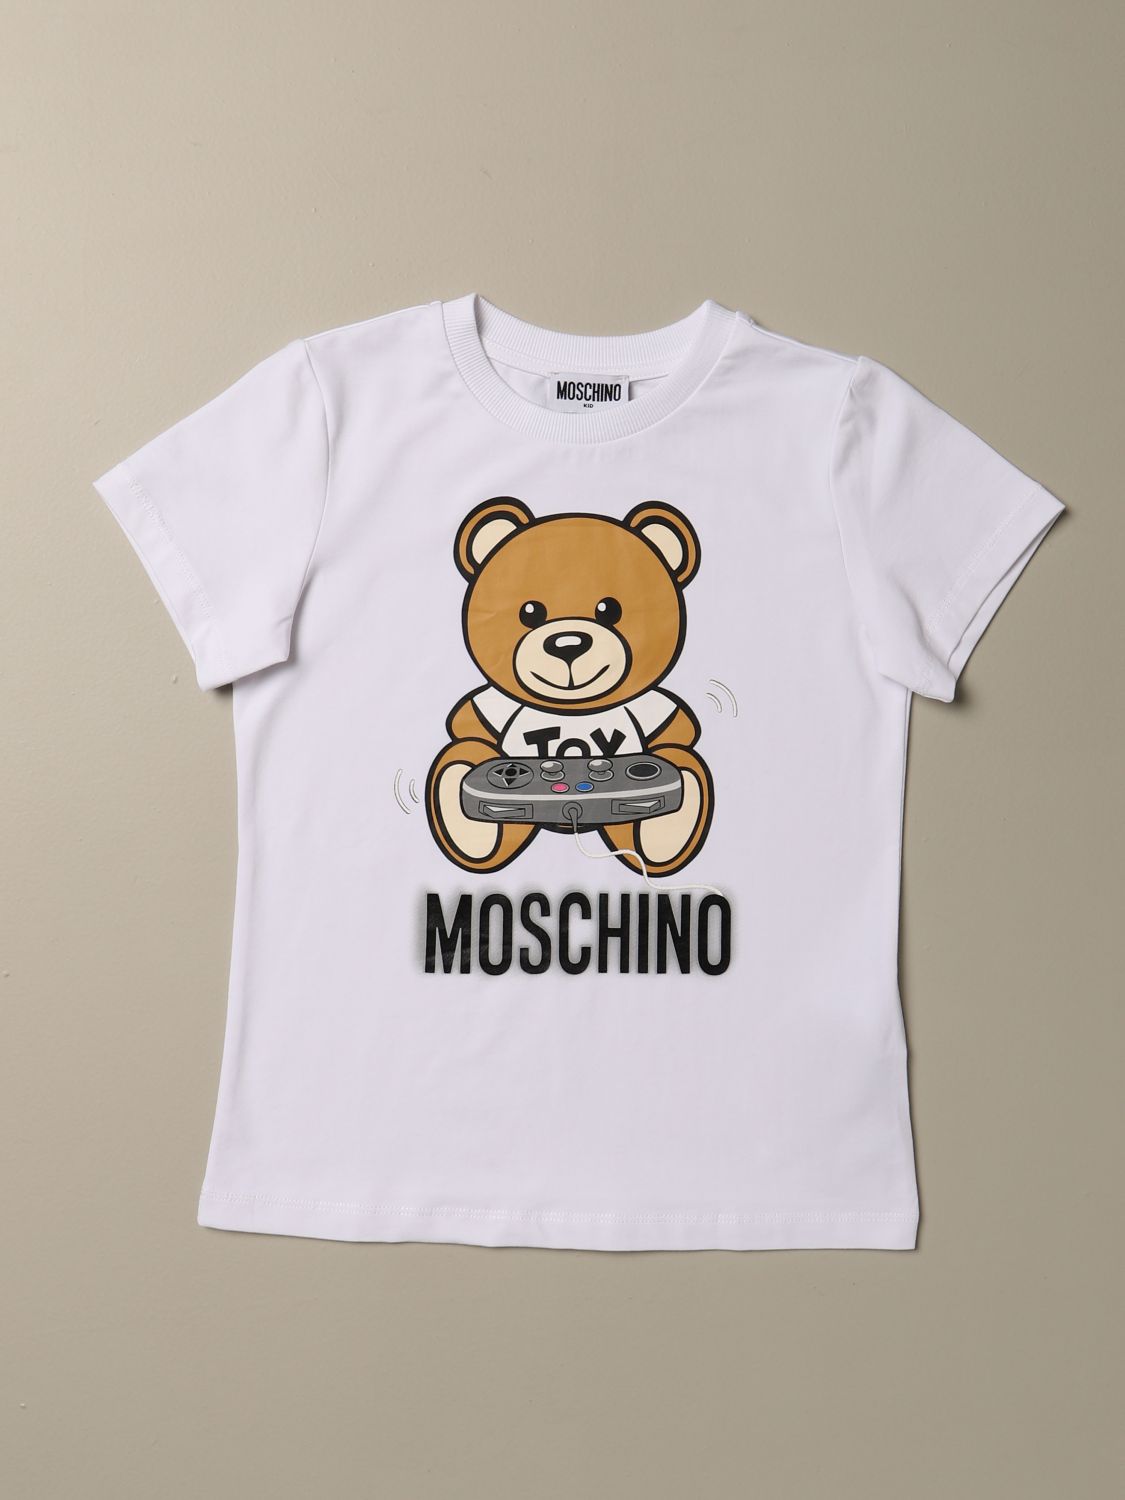 moschino shirt boys